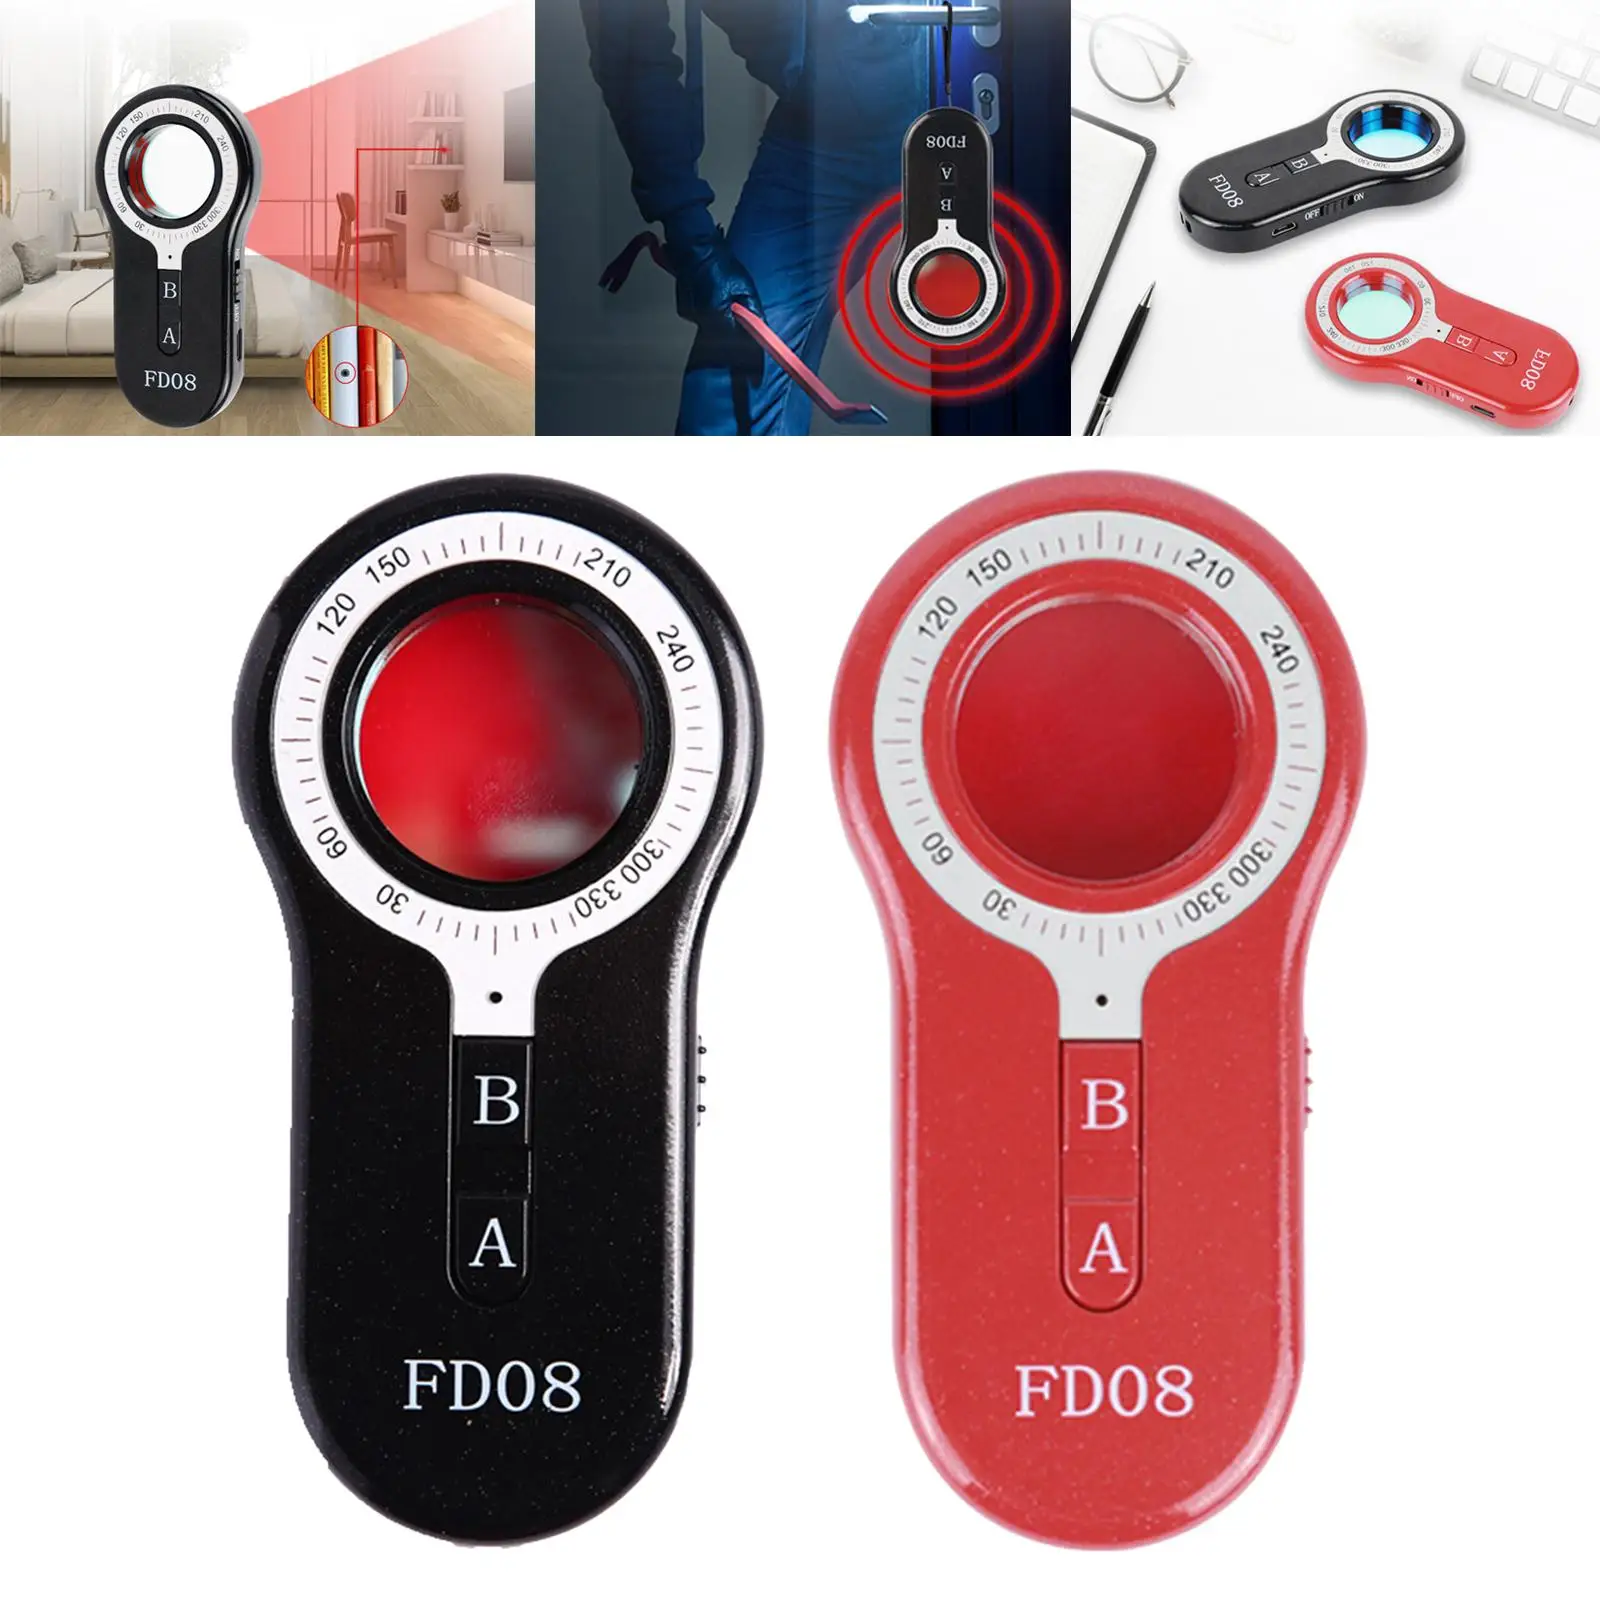 Wireless Detector Camera Multifunctional Signal Alarm Infrared IR Scanner for Locker Room Bathroom Restrooms Security Device